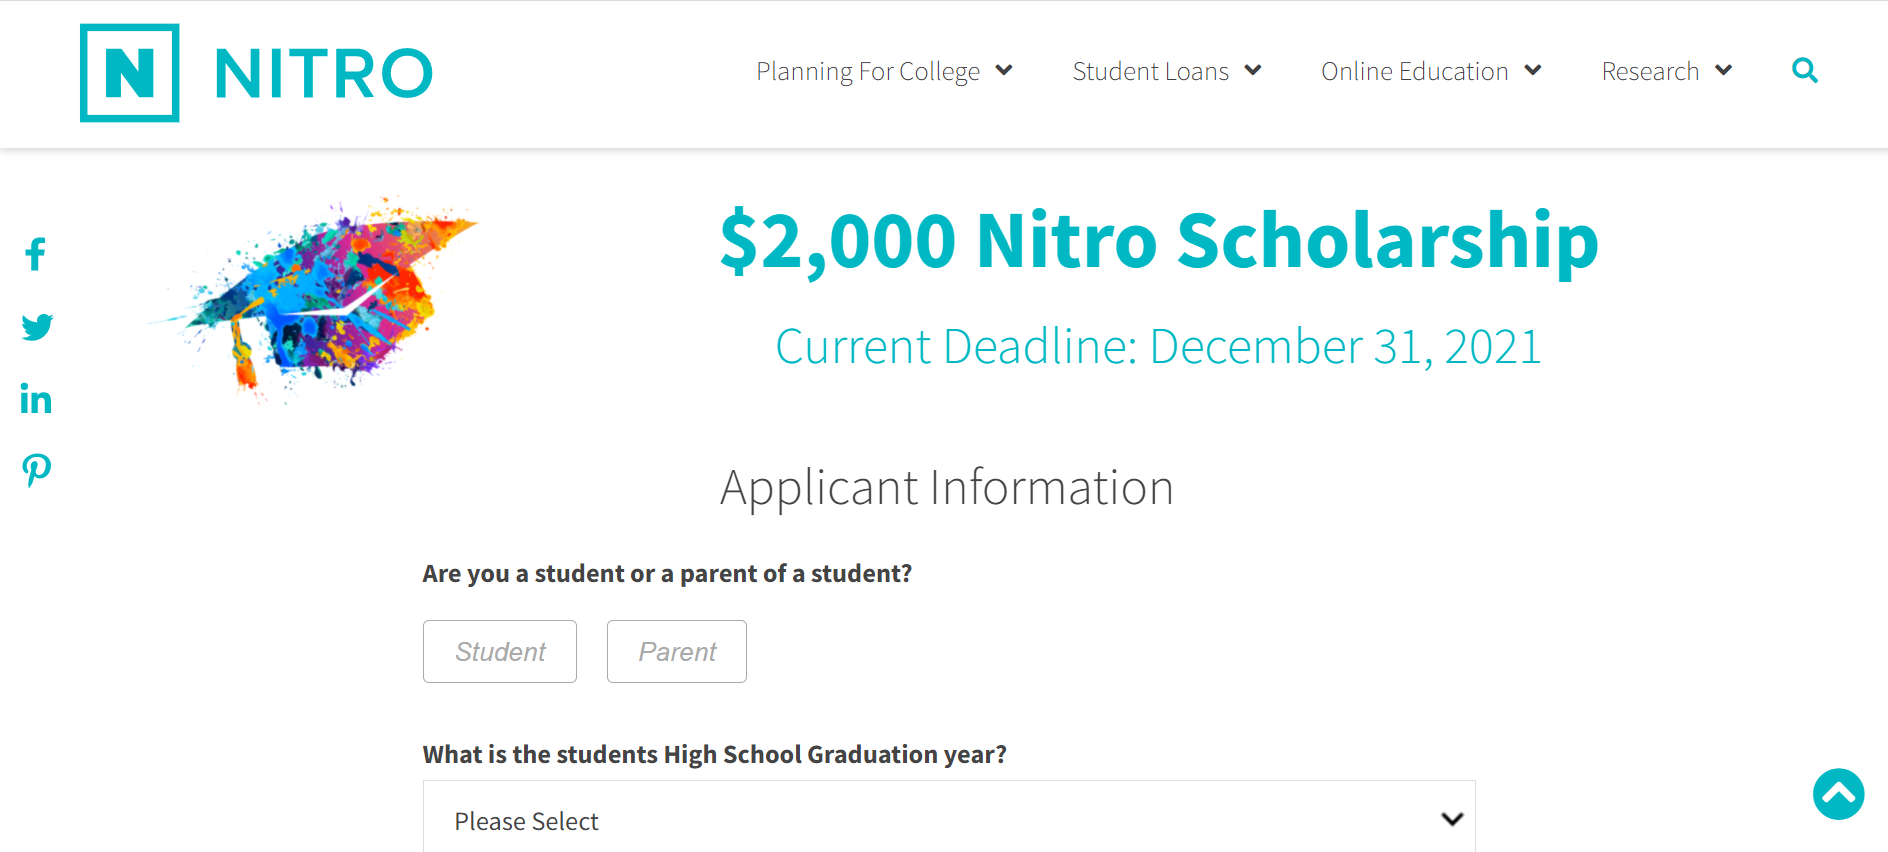 nitro 2000 no essay scholarship